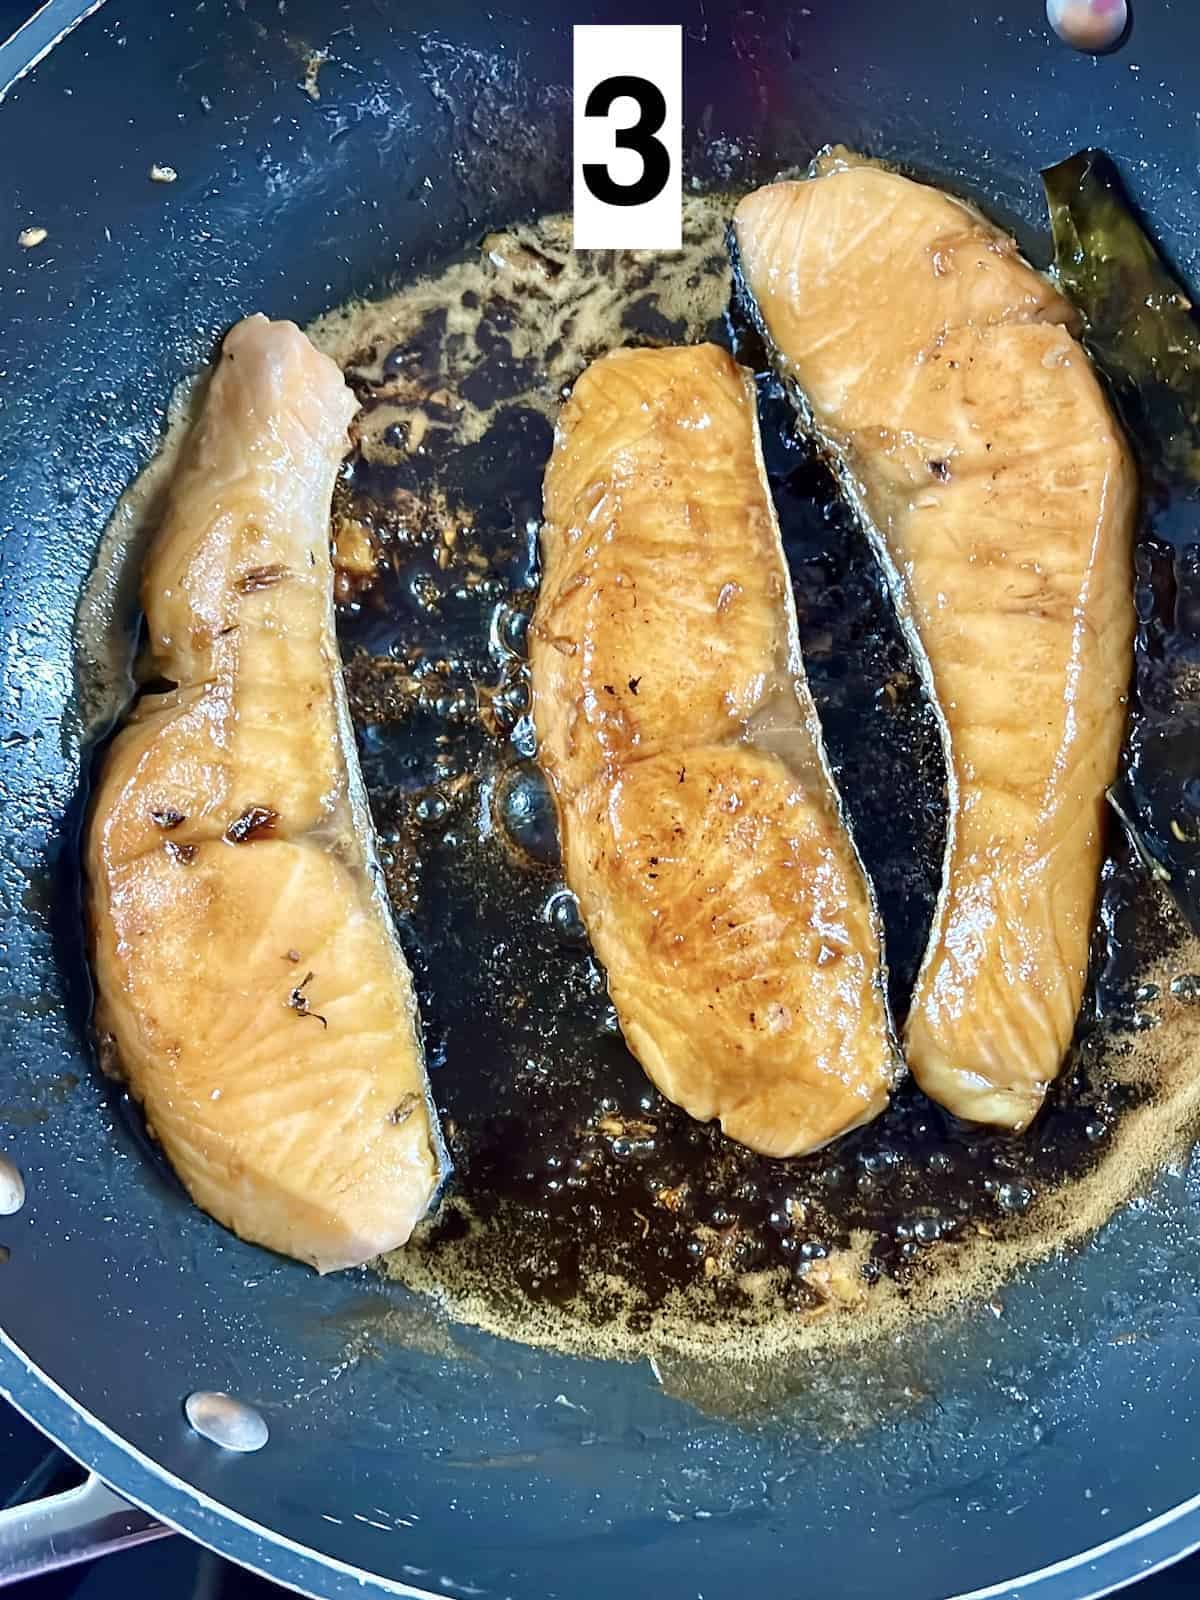 3 salmon filets in a pan with teriyaki sauce.